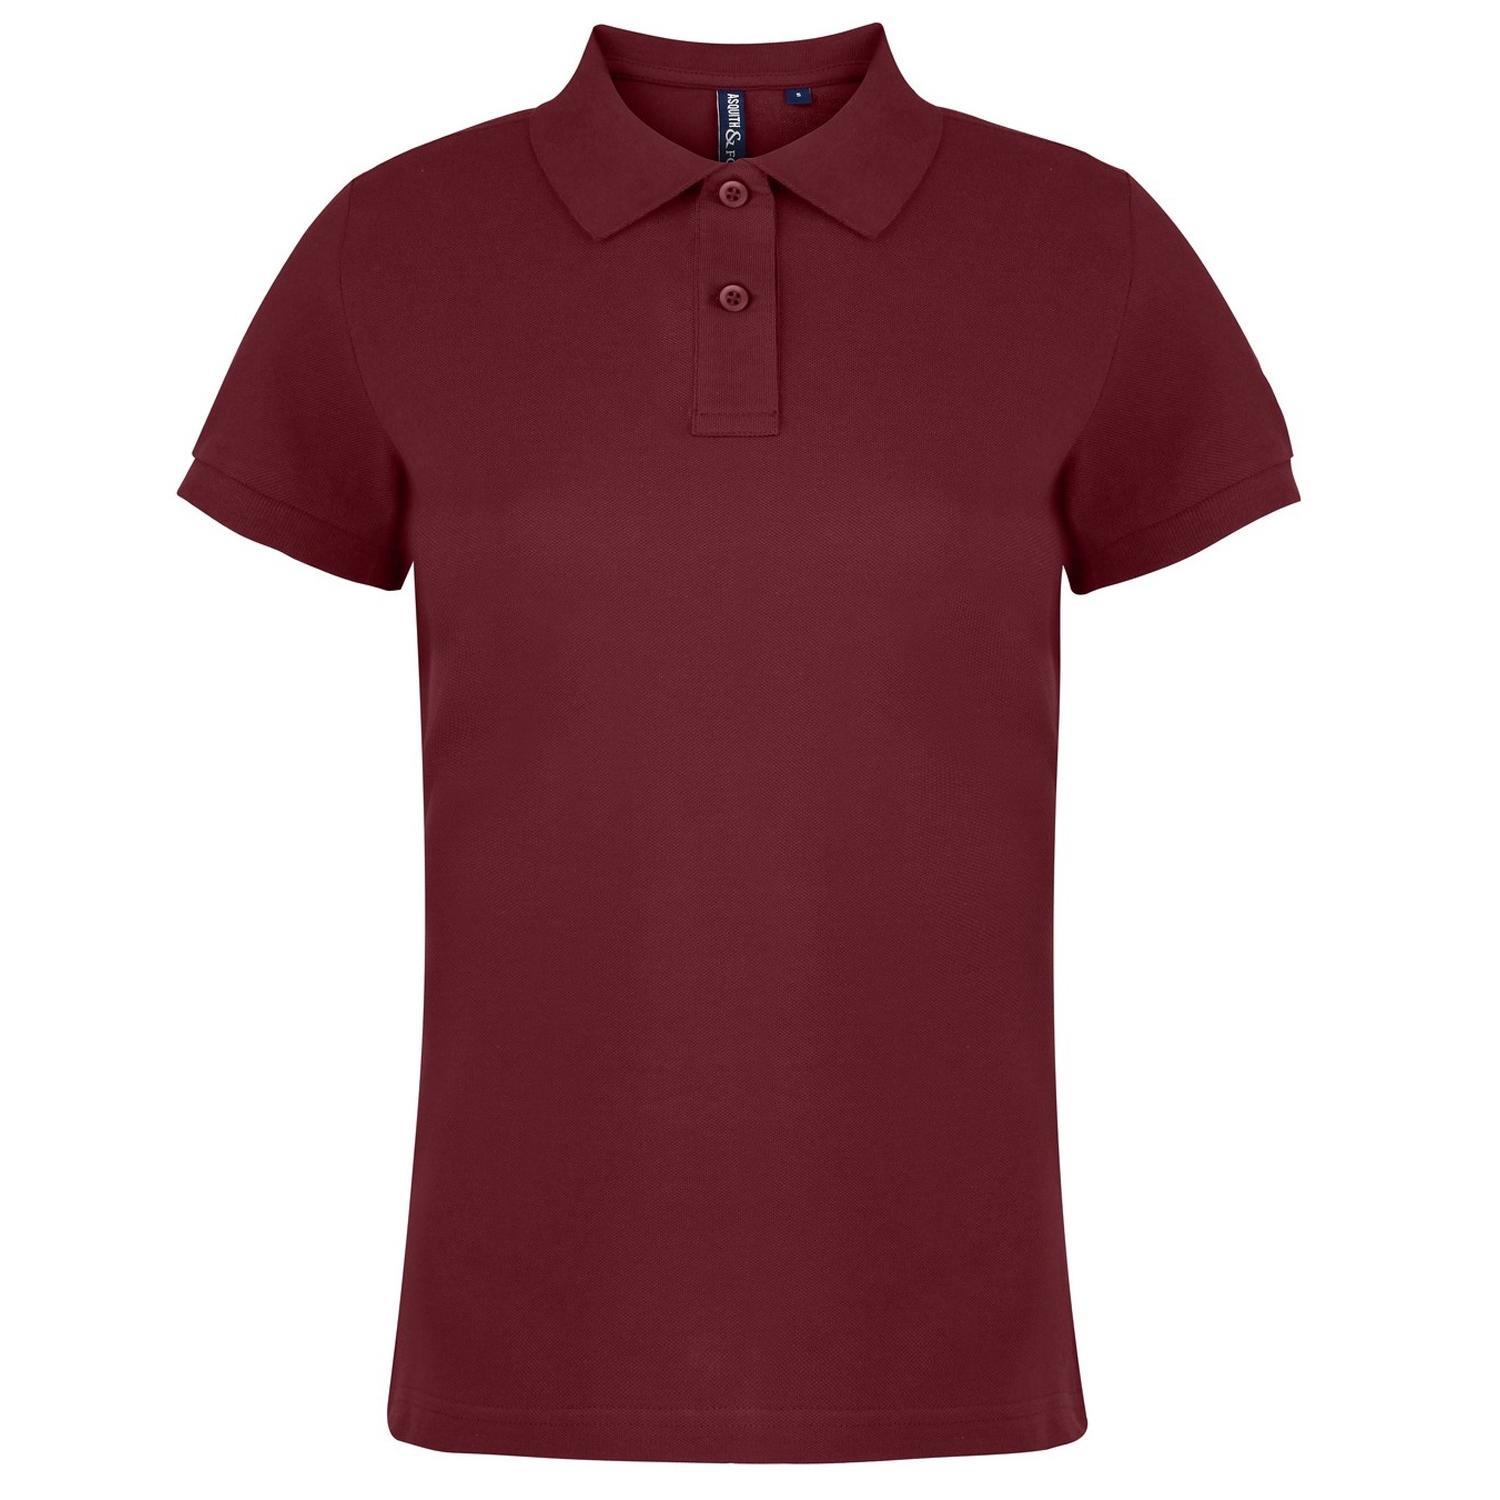 Asquith & Fox Womens/Ladies Plain Short Sleeve Polo Shirt (Burgundy) (XL)